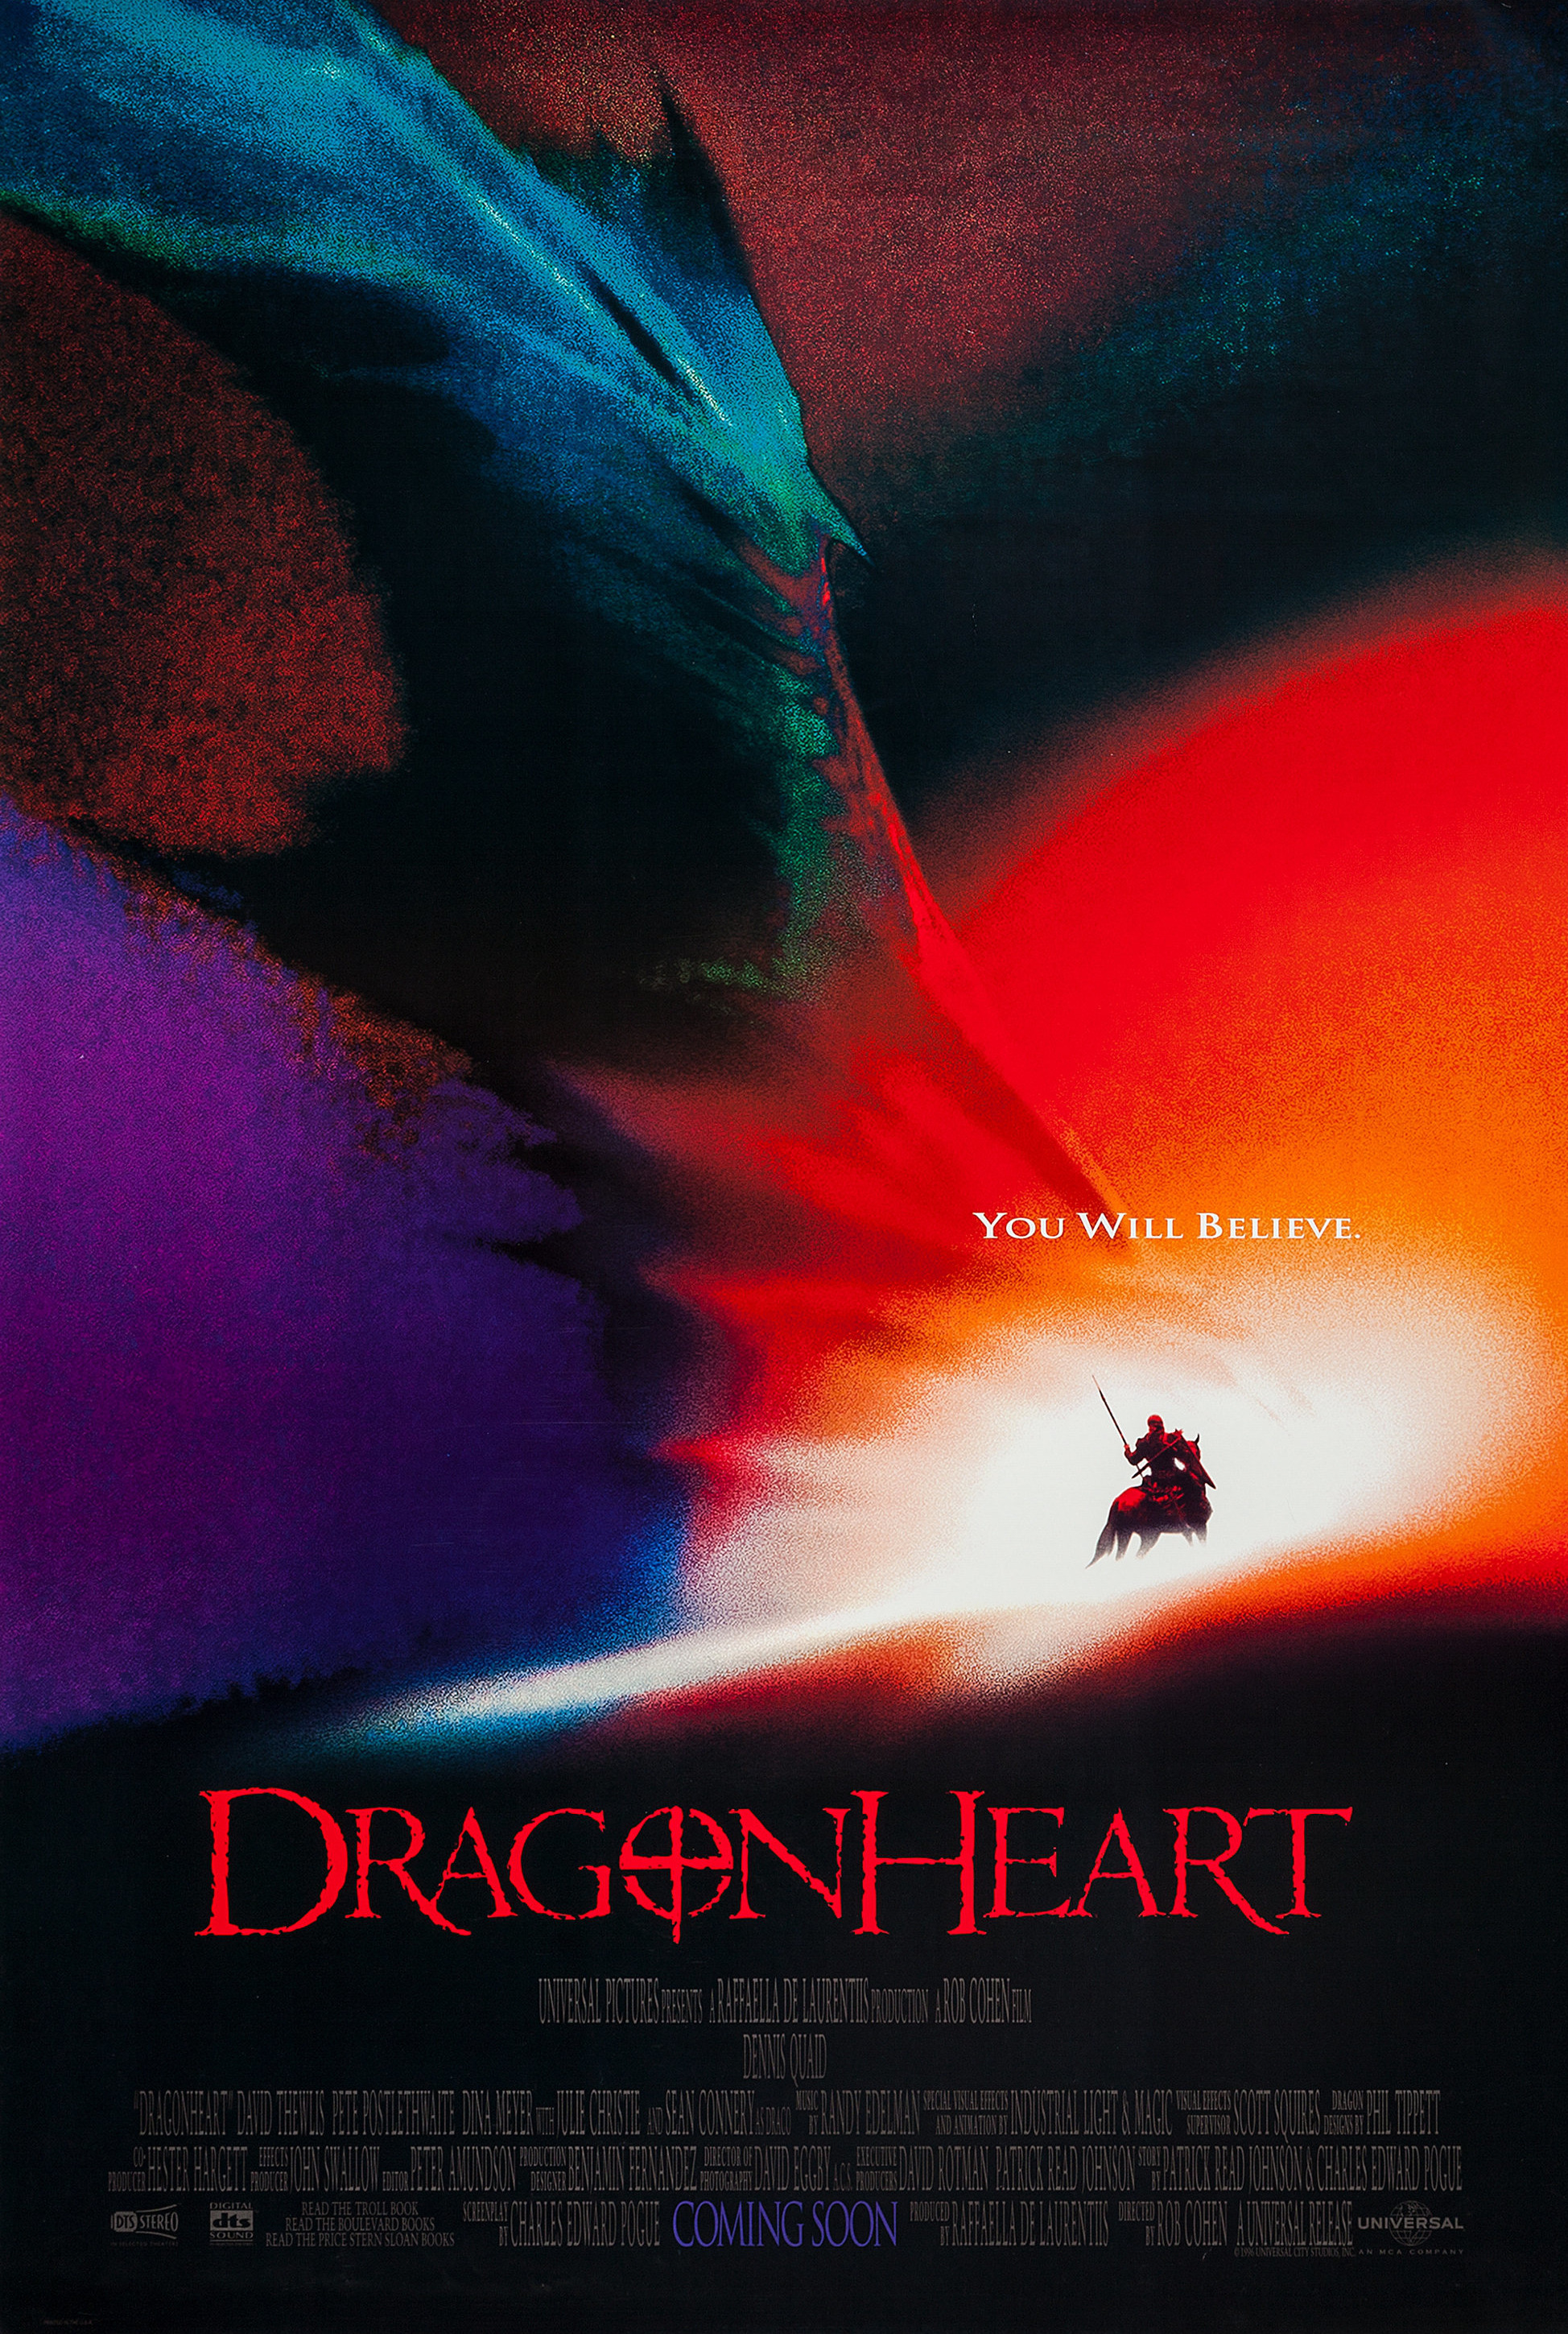 Mega Sized Movie Poster Image for Dragonheart (#1 of 4)